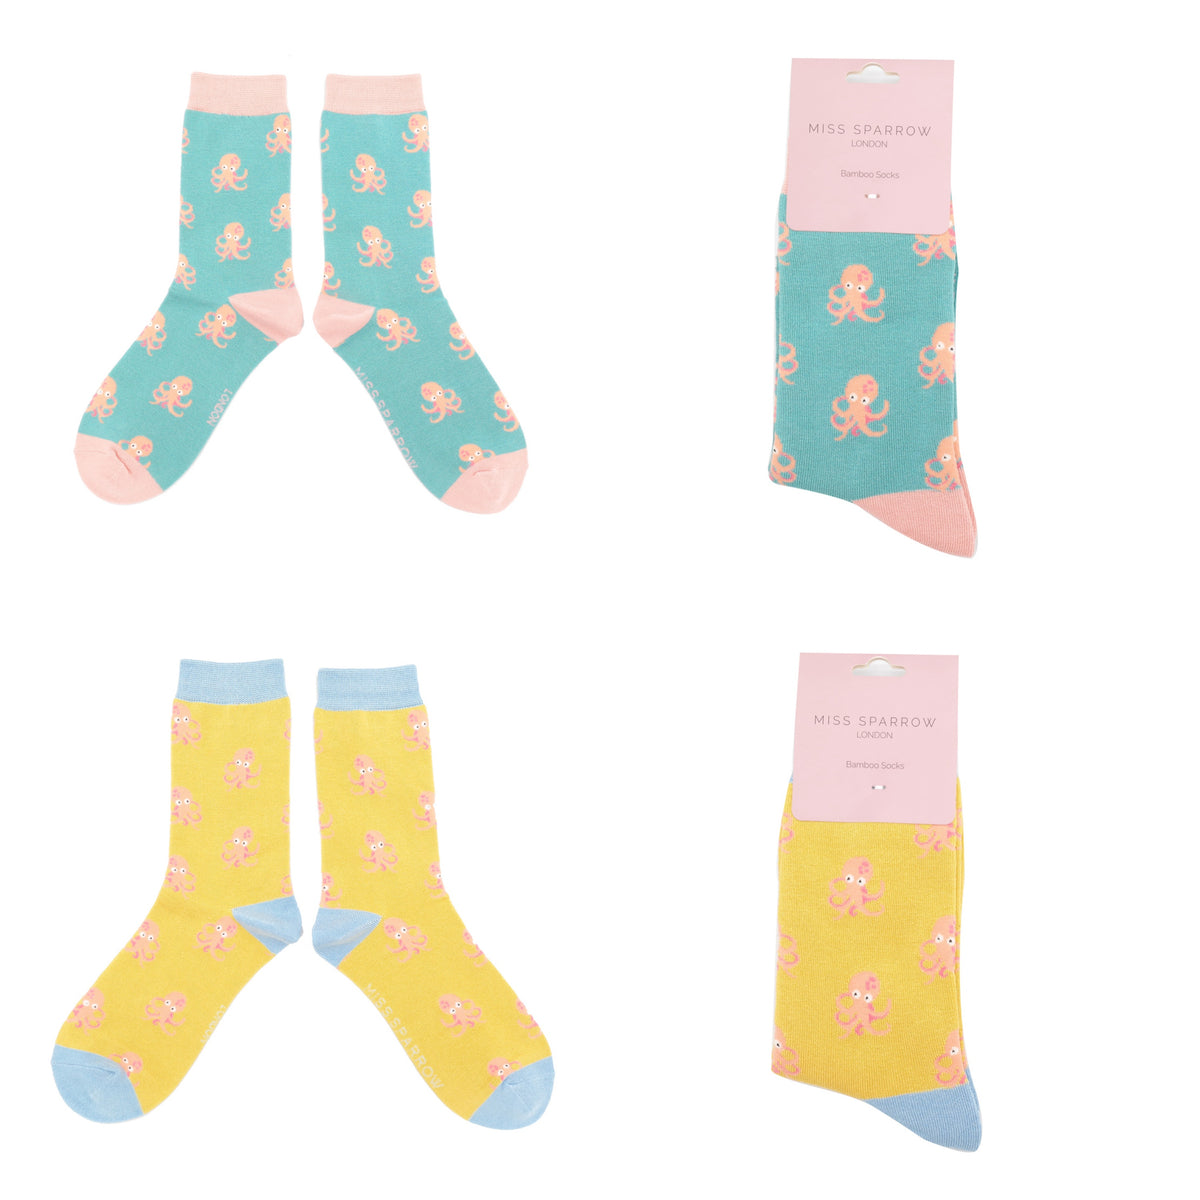 Miss Sparrow Bamboo Socks for Women - Little Octopus Composite